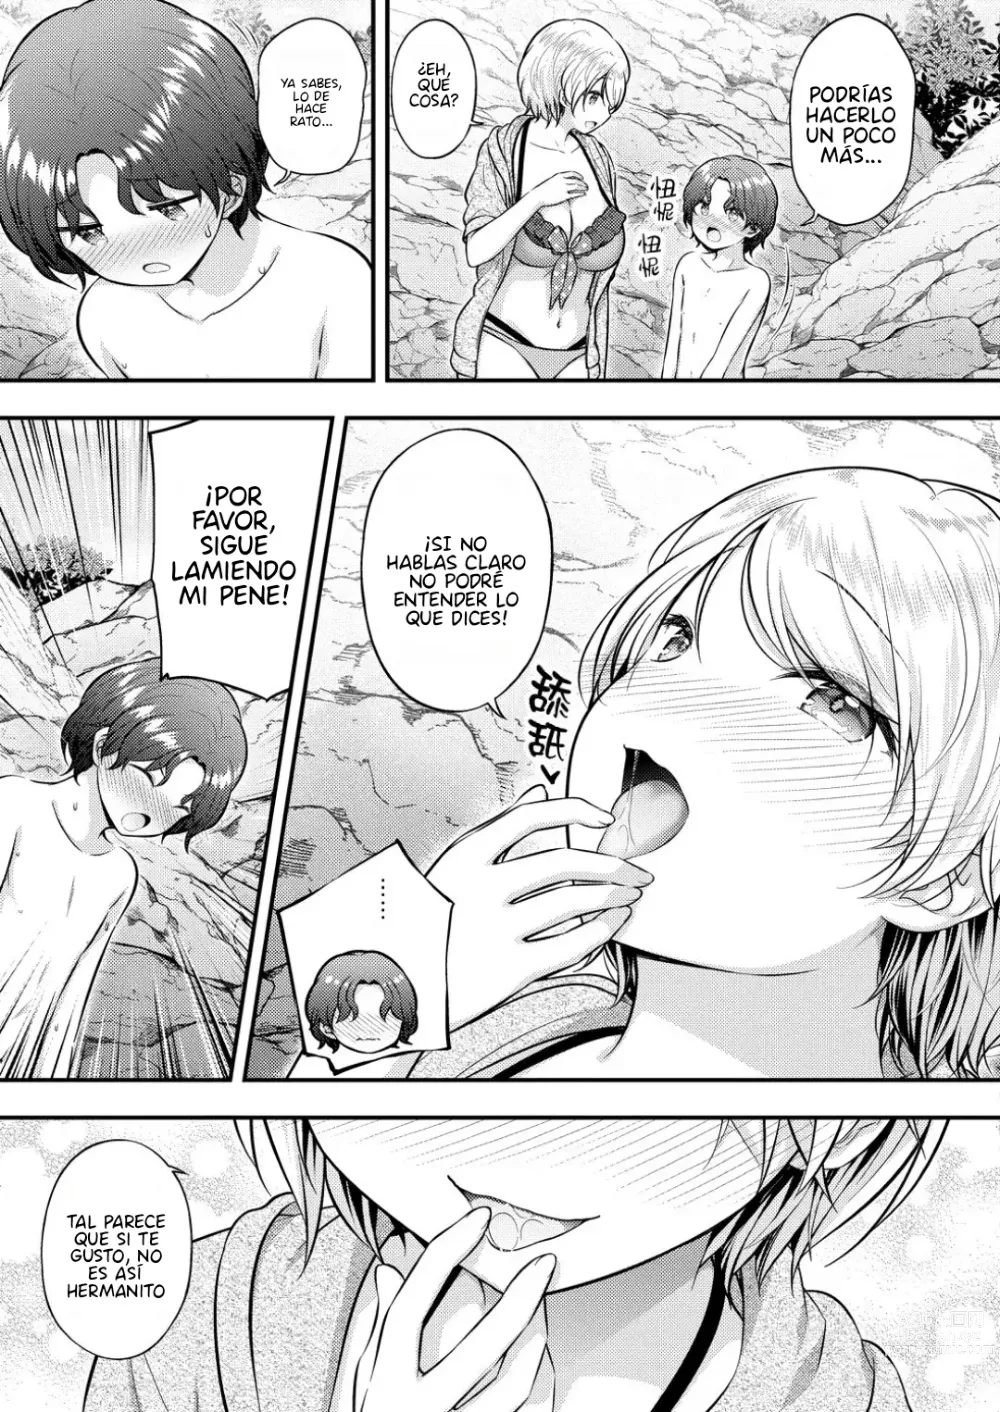 Page 9 of manga Una aventura de Verano.